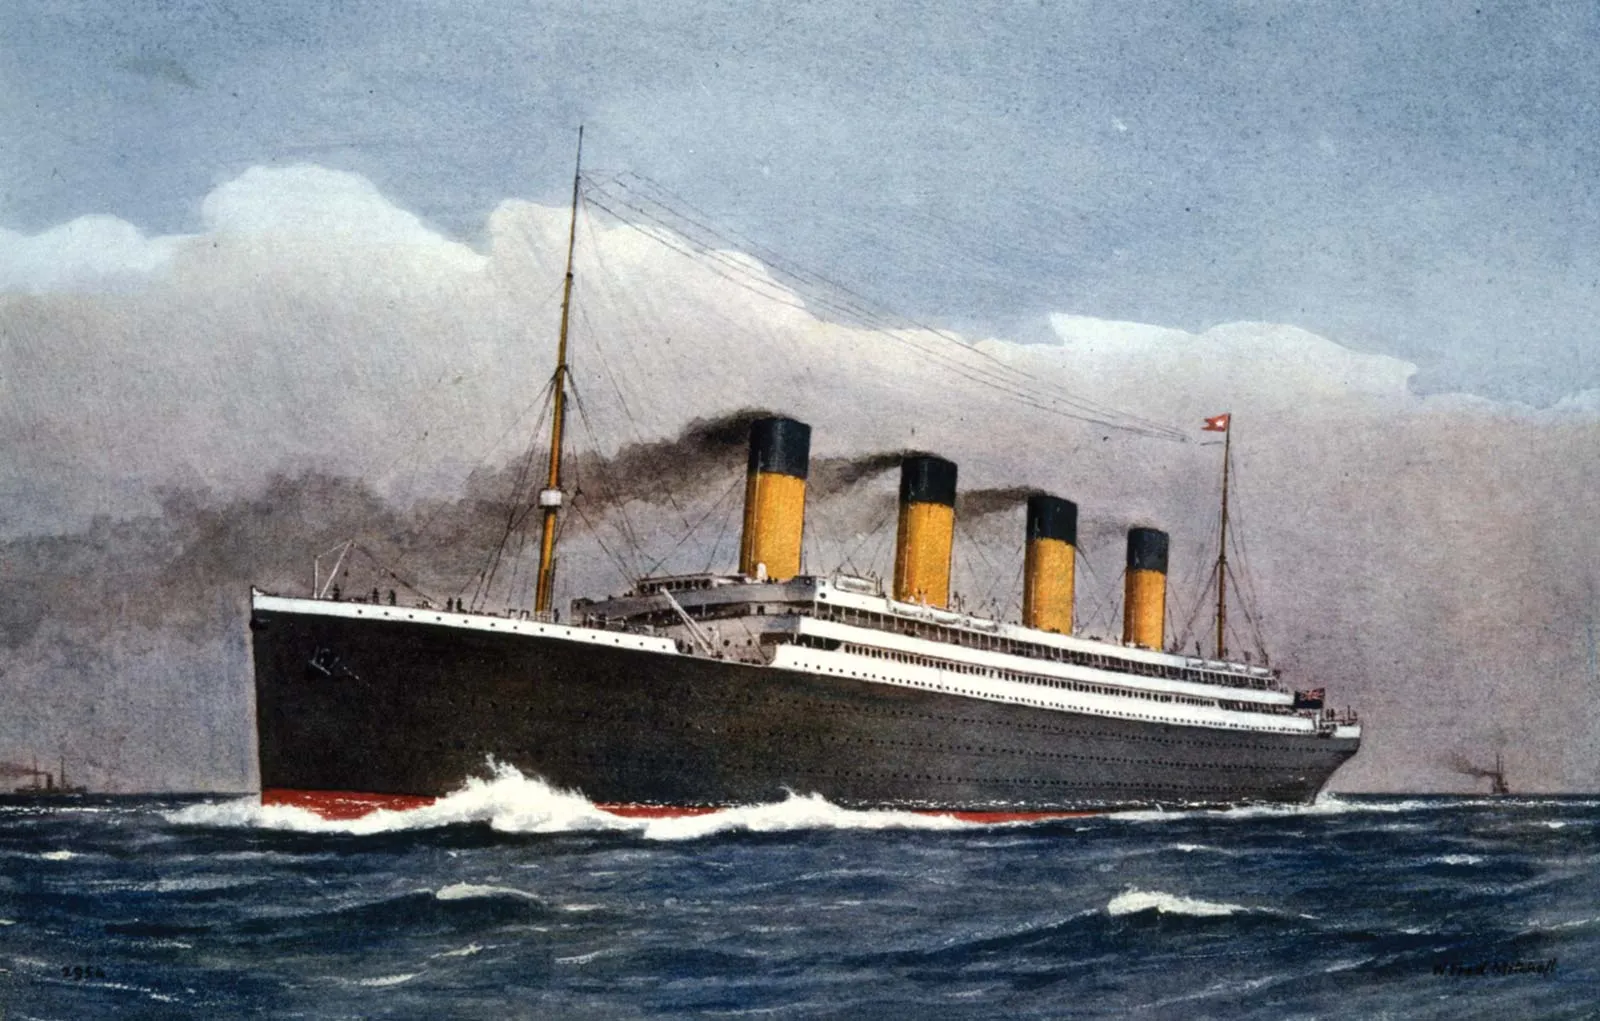 An illustration of the titanic on a choppy blue ocean.